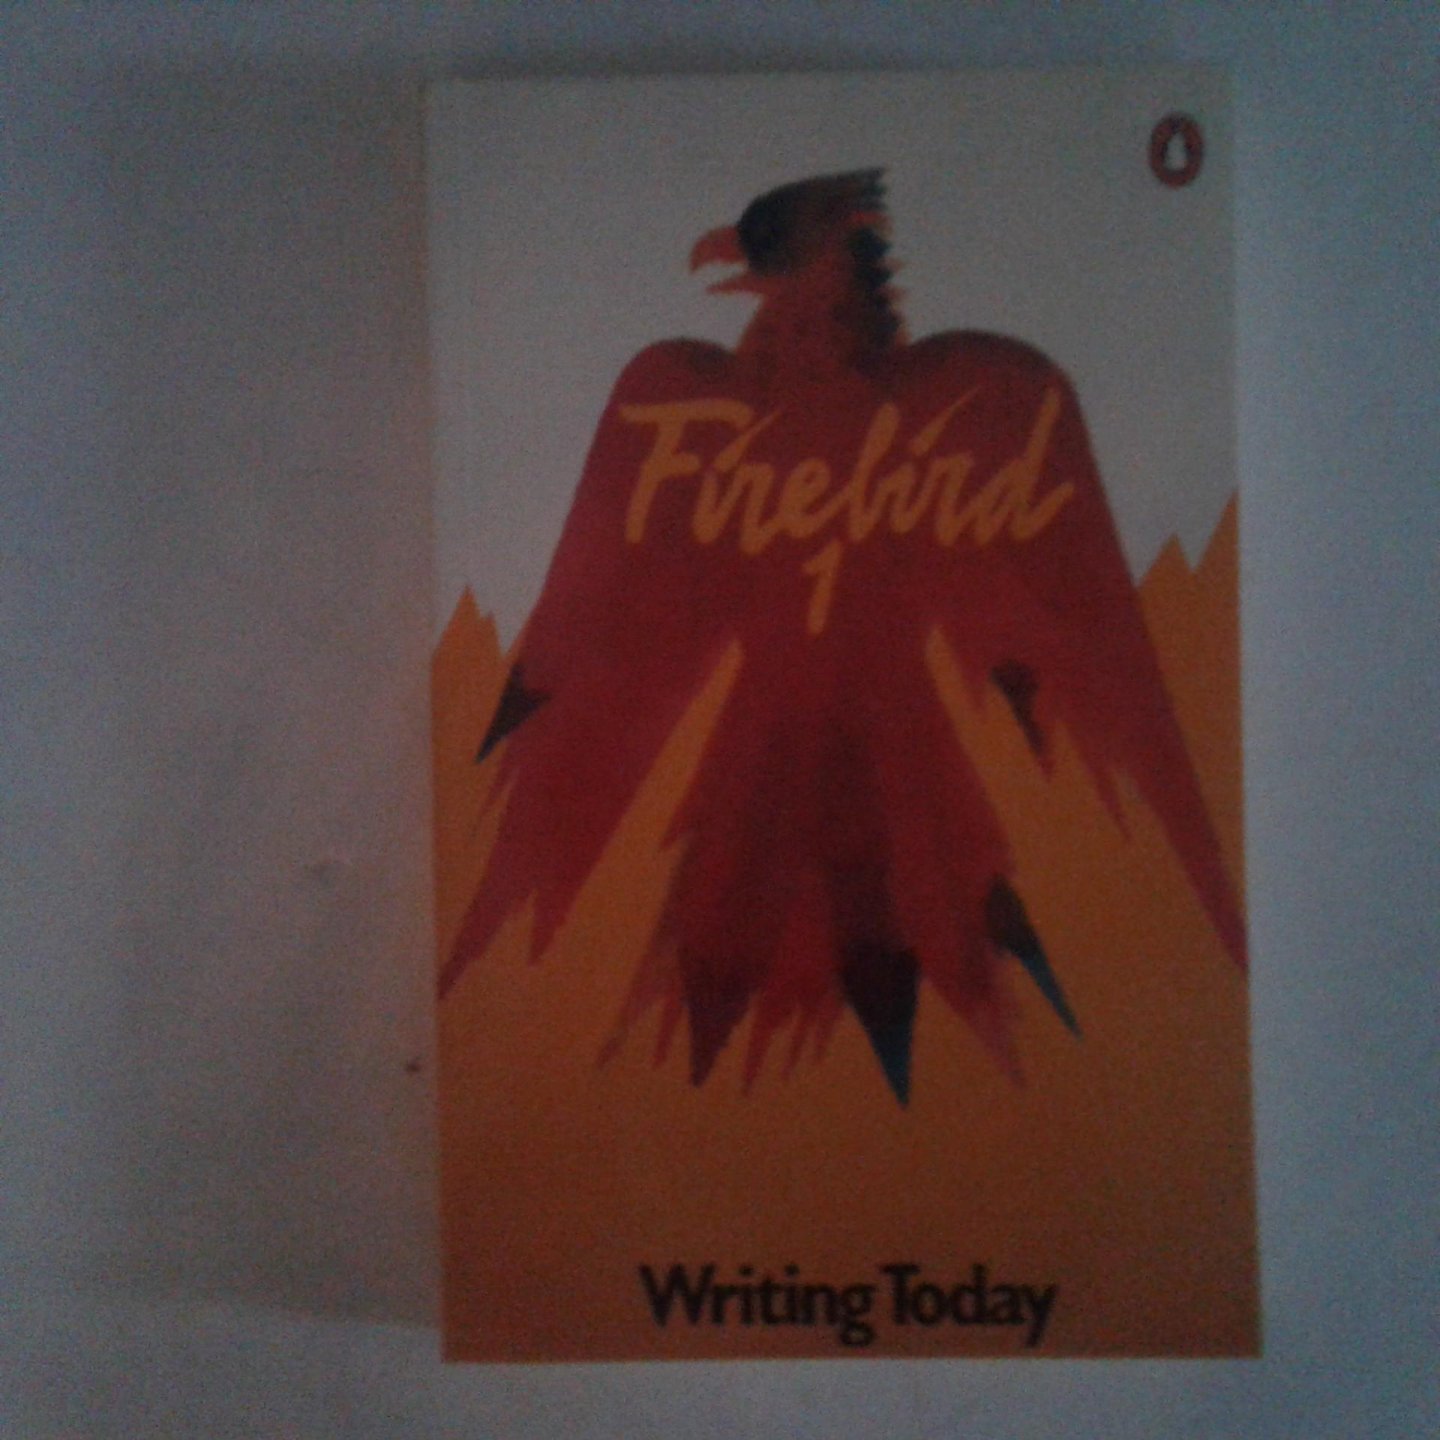 Binding, T.J. - Firrbird 1 ; Writing Today